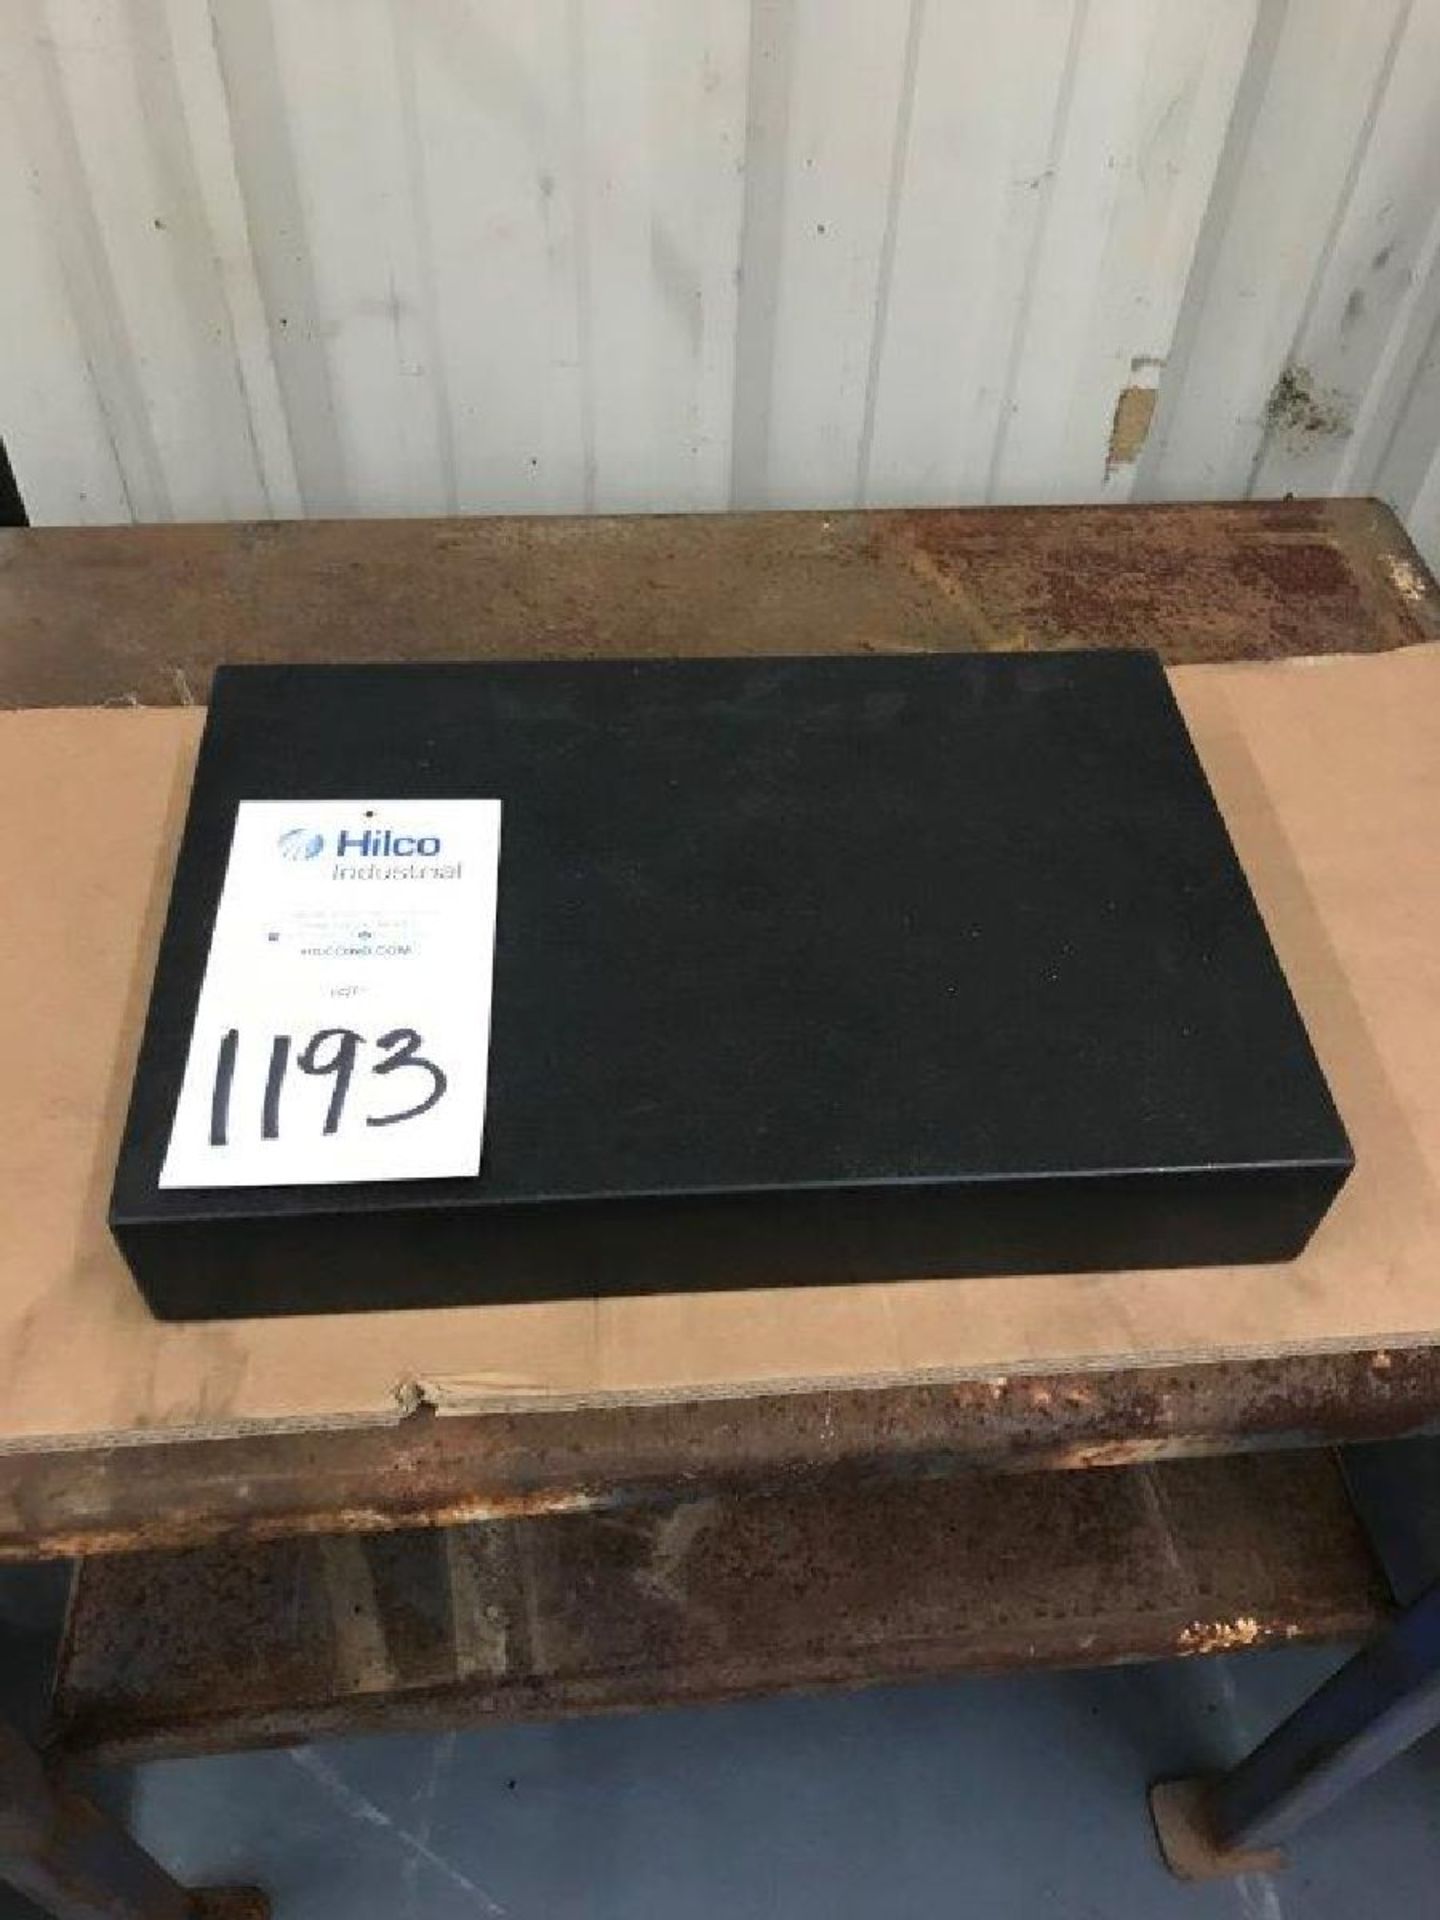 12" x 18" x 3" Black Granite Surface Plate